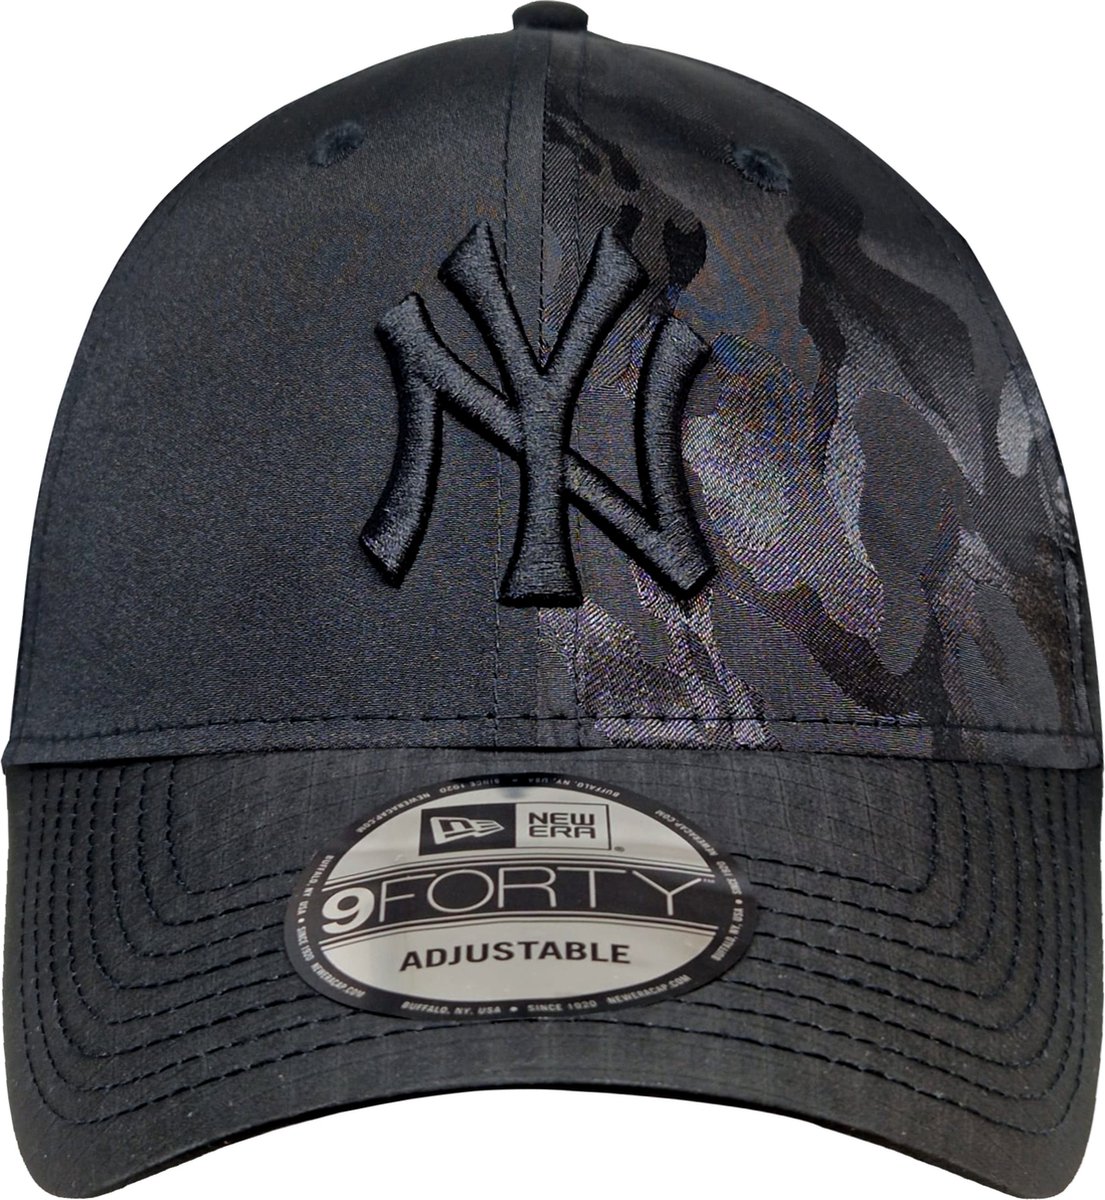 New York Yankees League Multi TEXTURE Black 9FORTY Adjustable - New Era